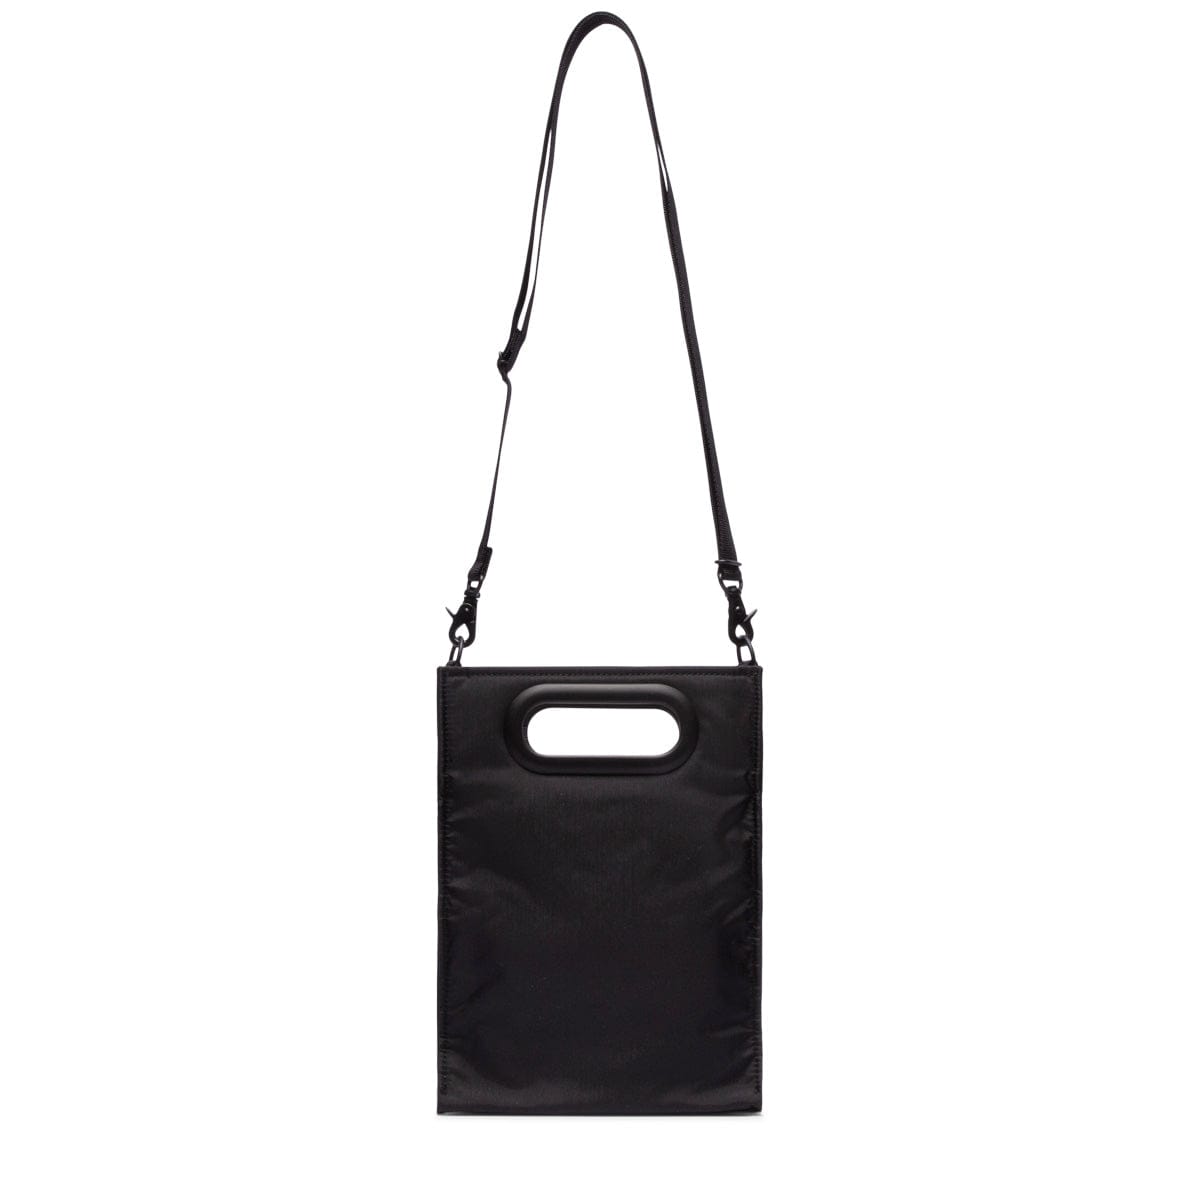 Calvin Klein Nylon Everyday Essential Small Tote Bag in Gray